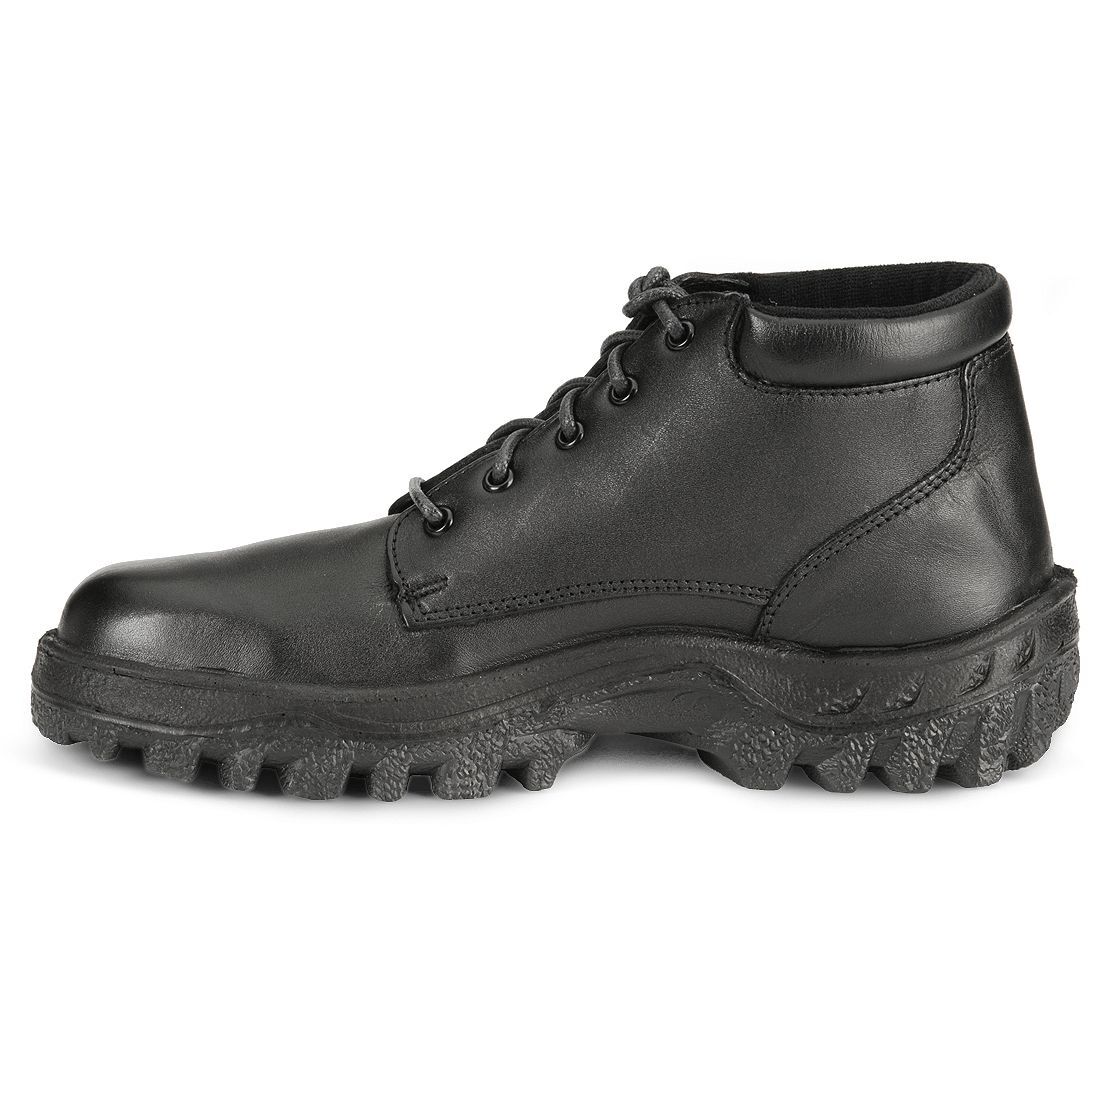 Rocky TMC Duty Chukka Boots - USPS 